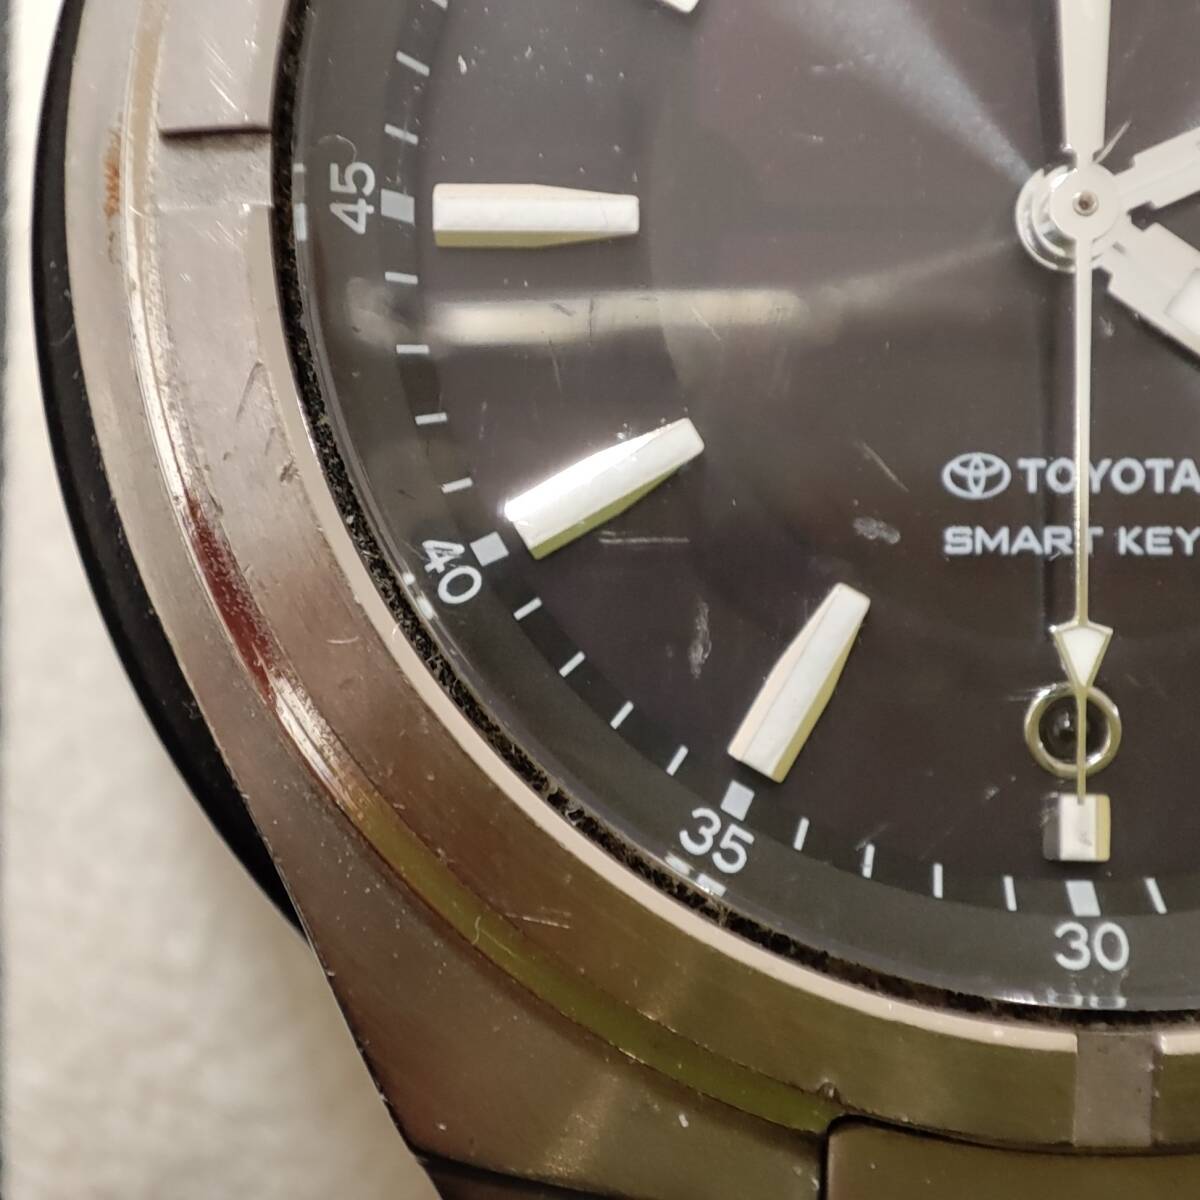 TOYOTA CROWN SMART KEY GN-4-S W830-T008216Y 腕時計 稼働品 ブラック文字盤 トヨタ クラウン スマートキー_画像4